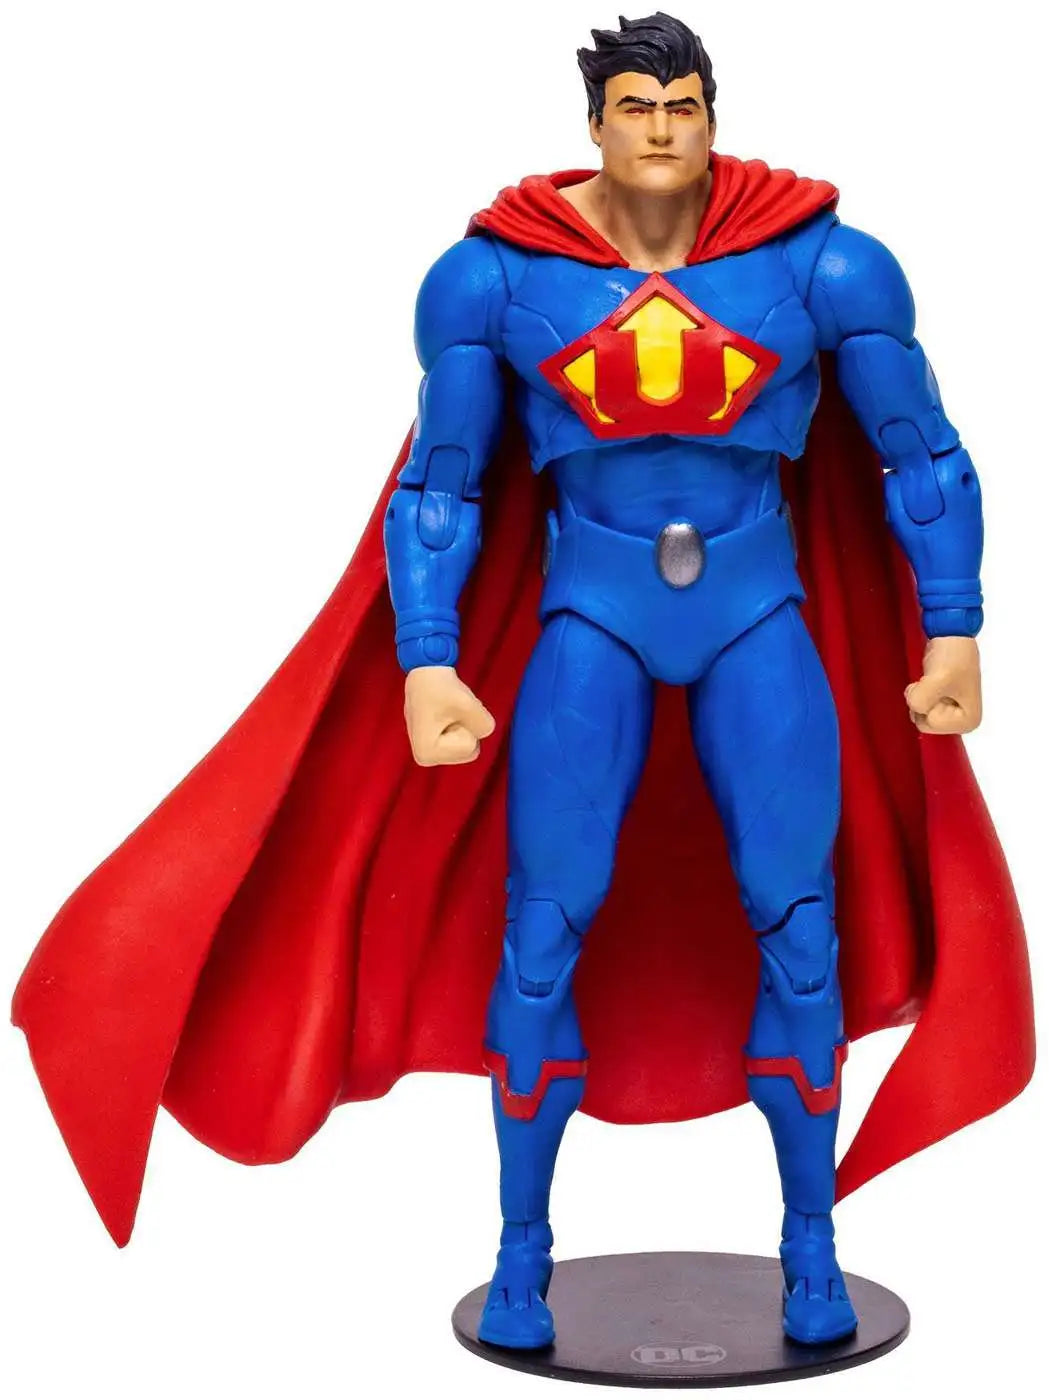 McFarlane Toys DC Multiverse - Superman of Earth-3 - Collect to Build Starro The Conqueror